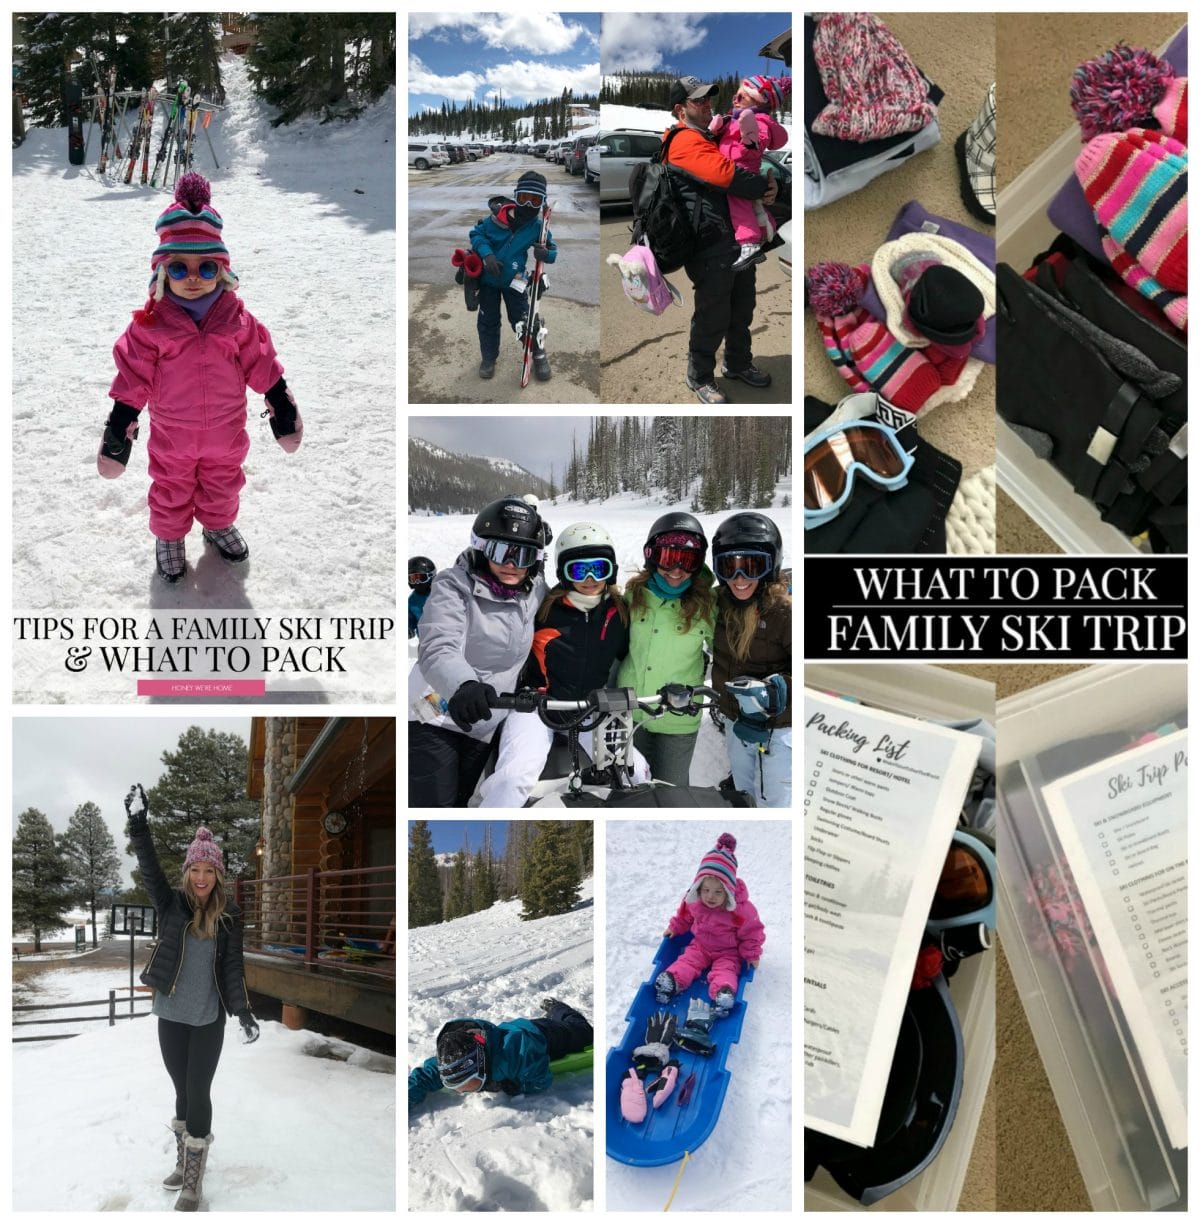 Ski trip Collage